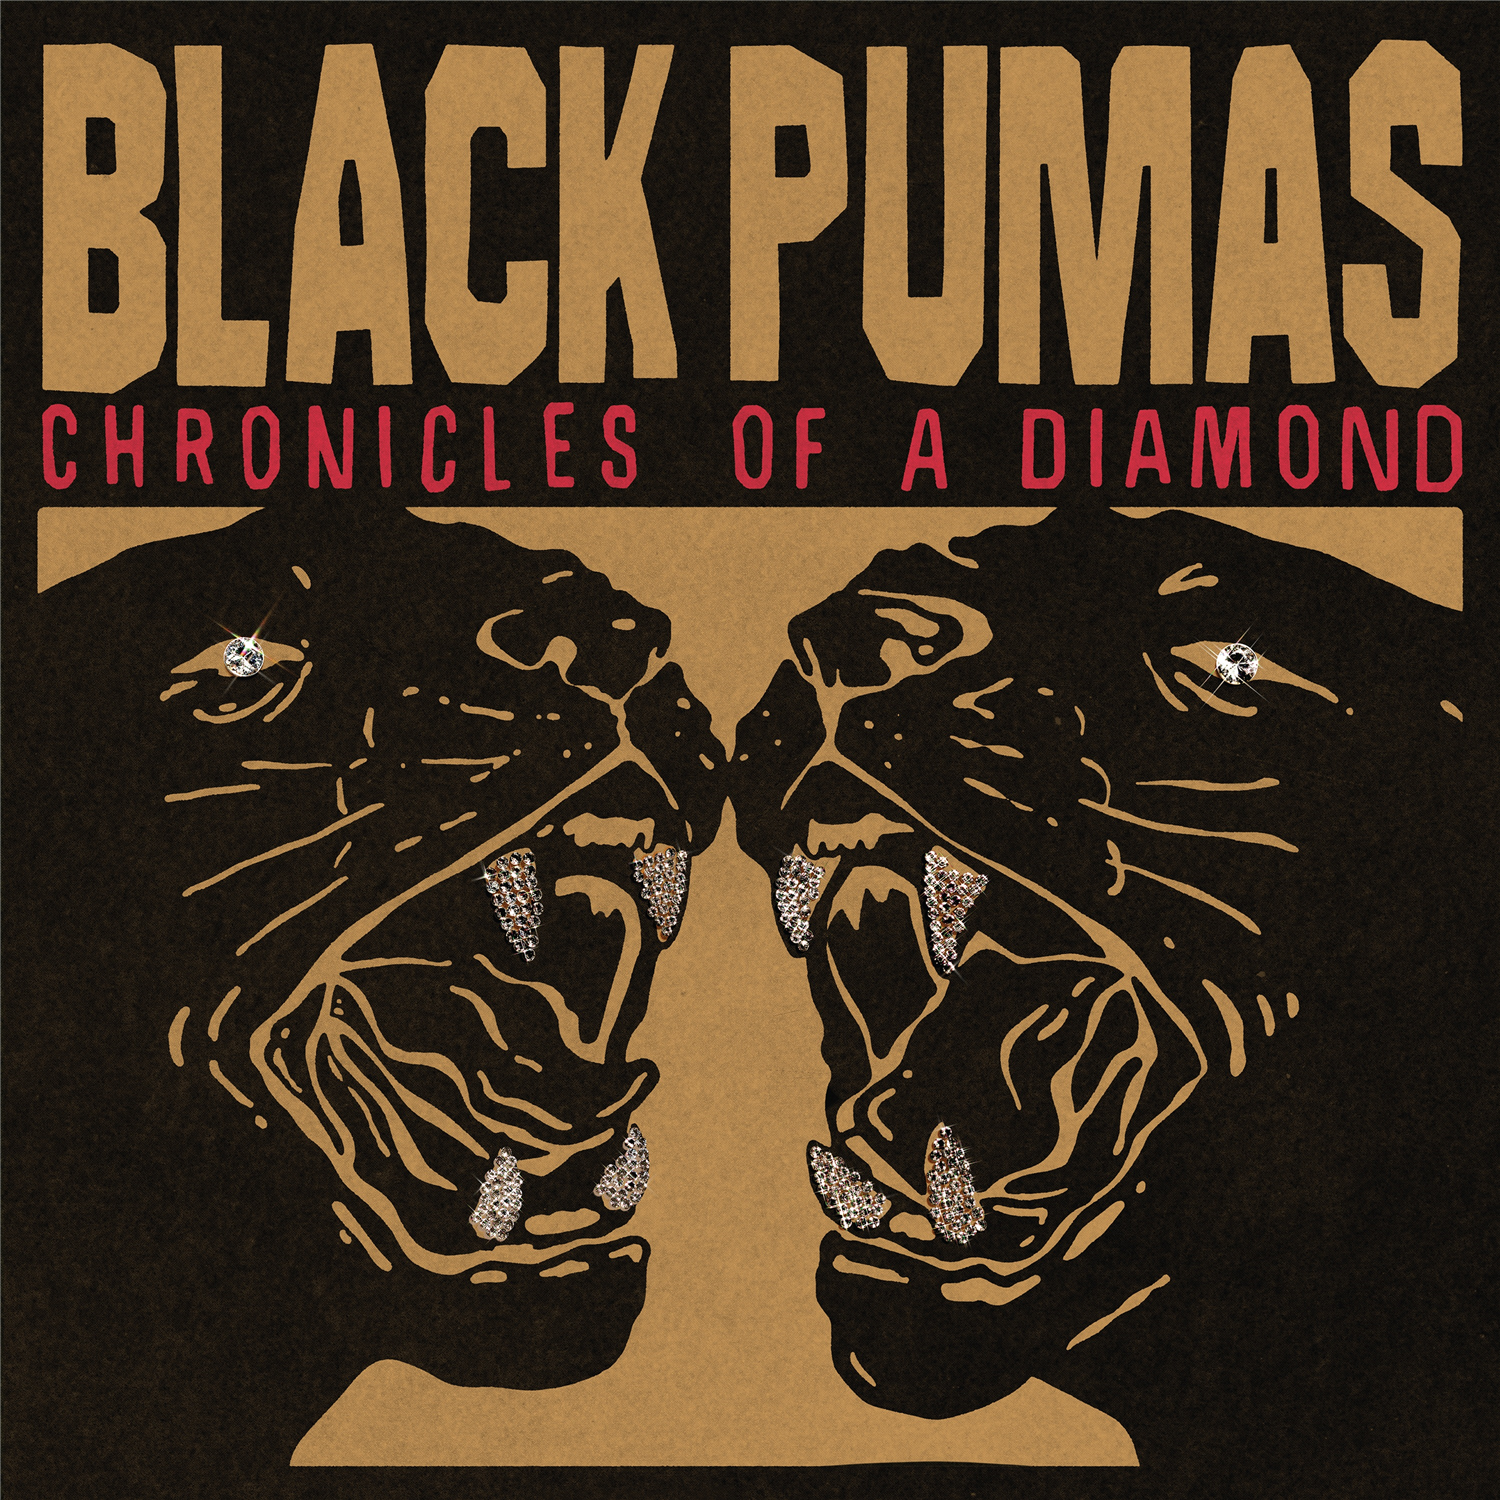 Black Pumas - Página 2 7f77ad11-a68d-70fd-a748-64ab8986c4ce